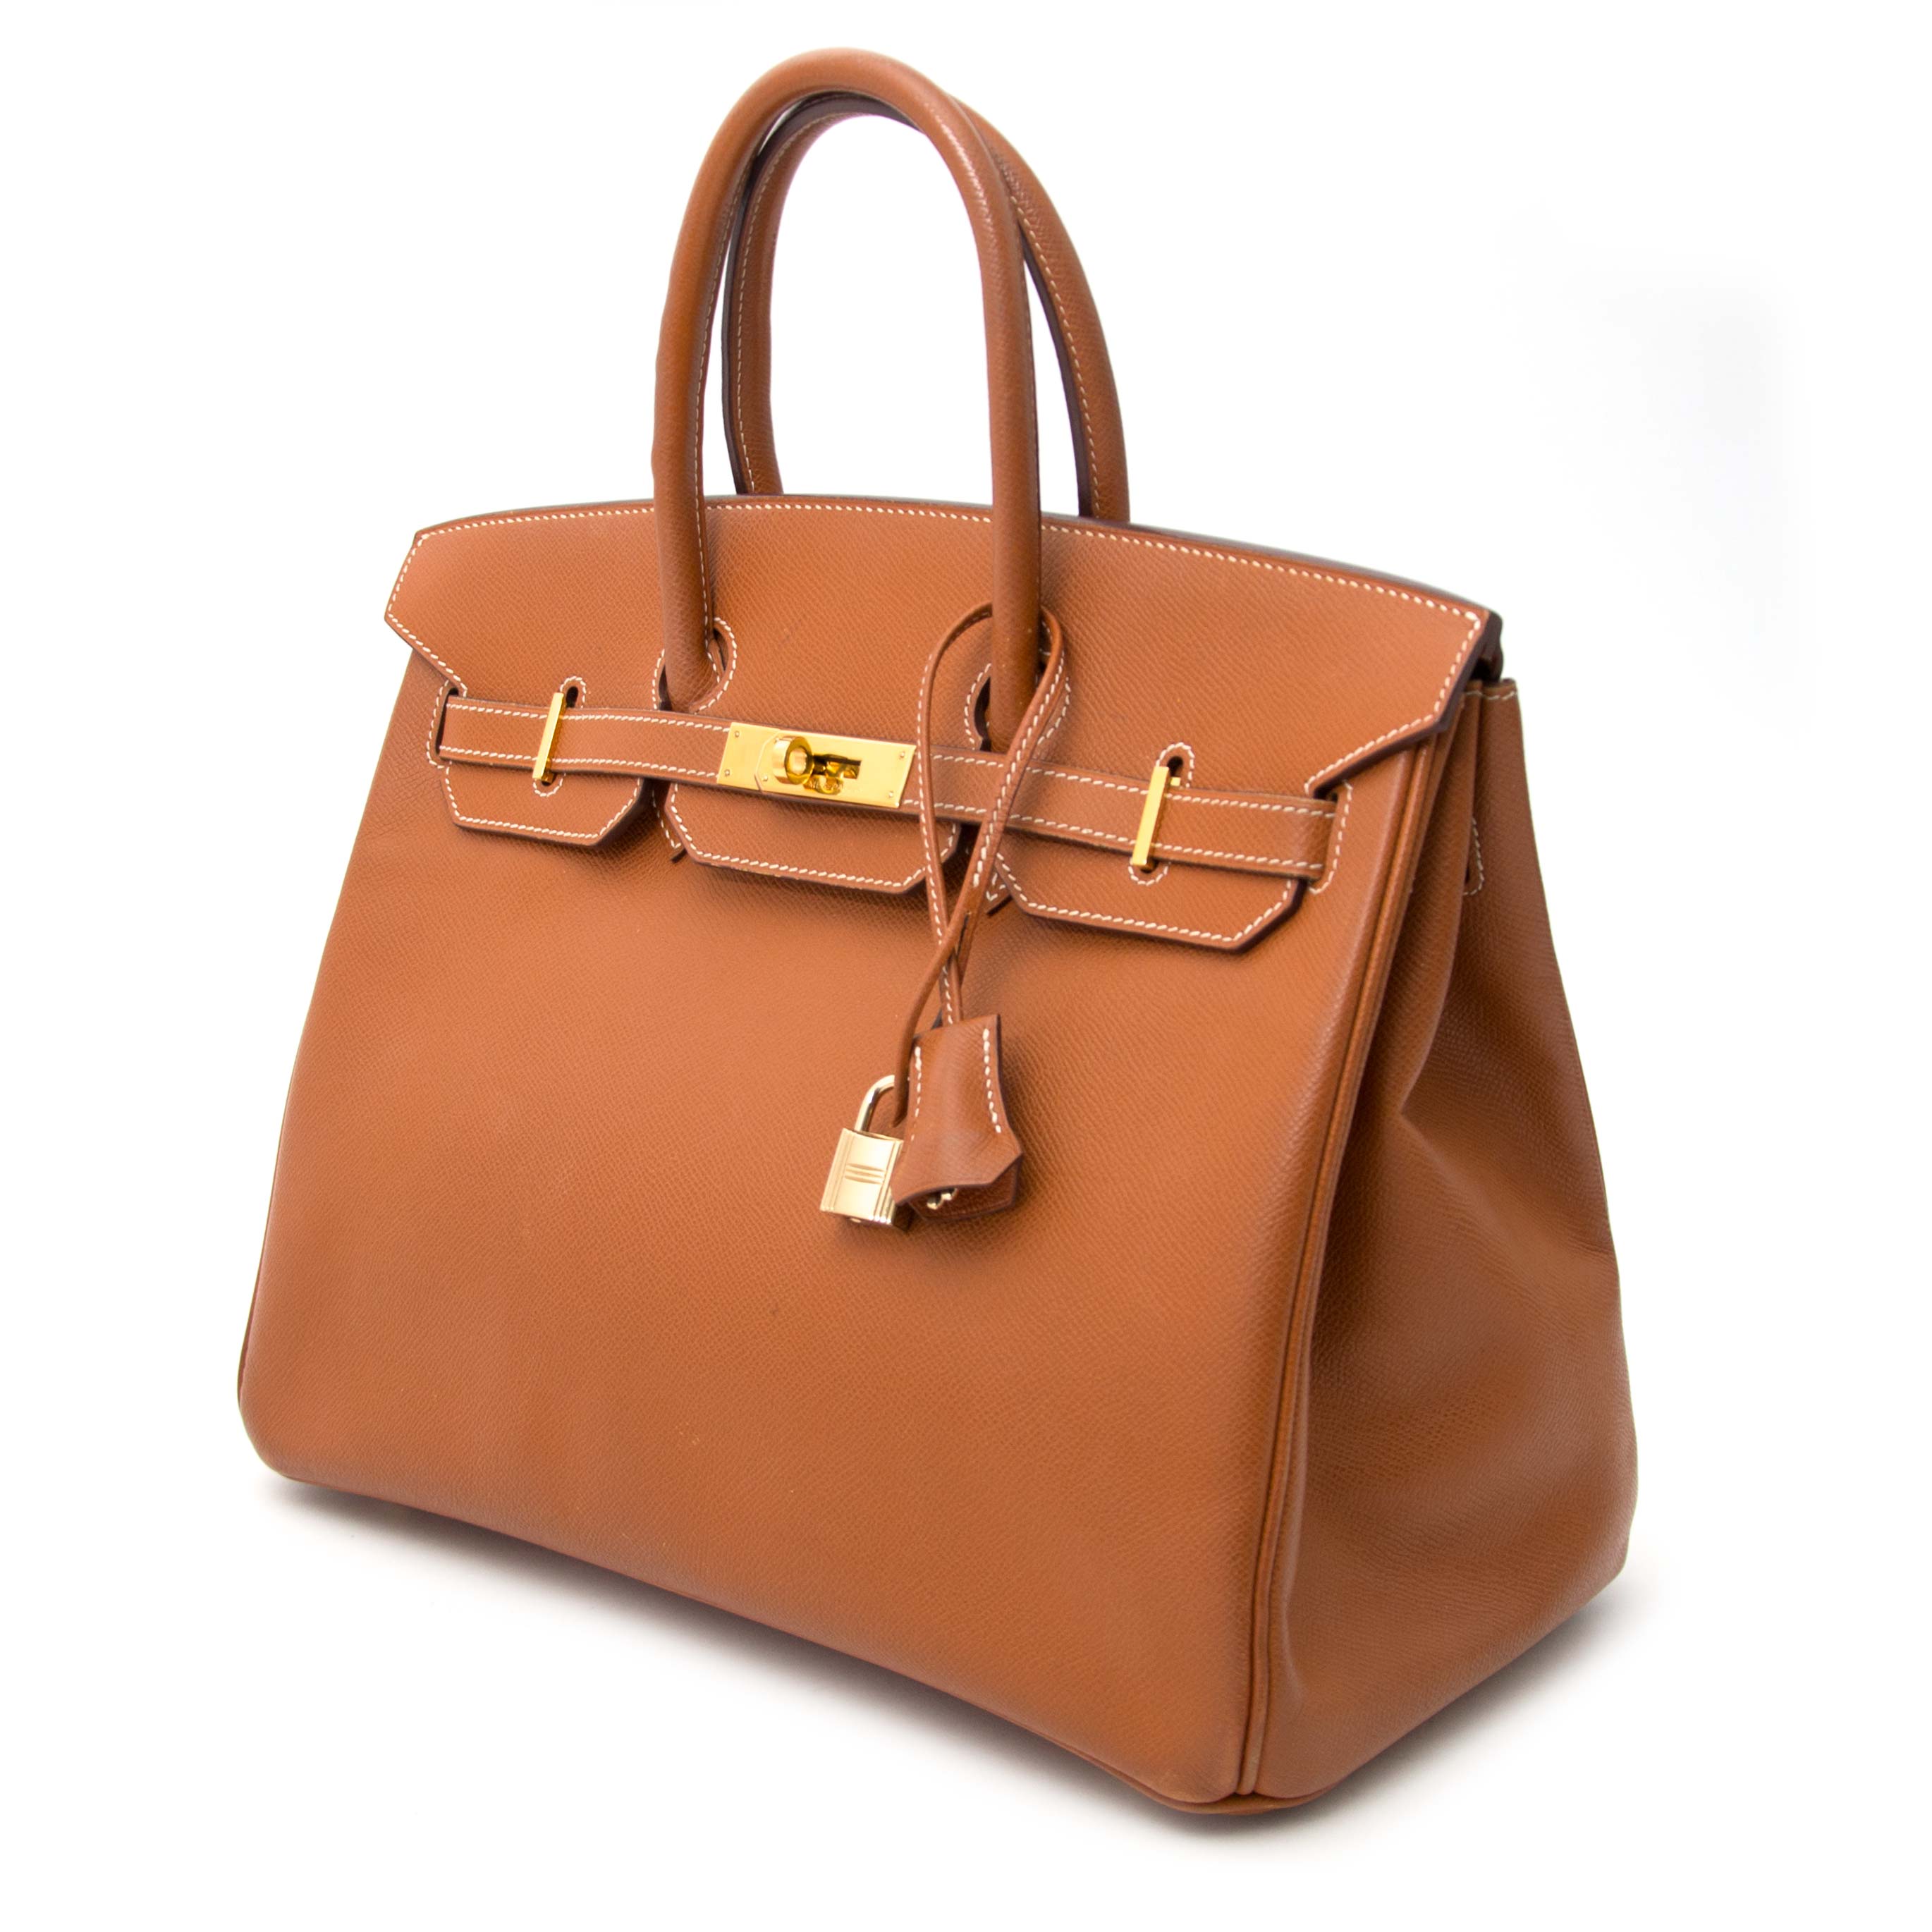 Hermès Birkin 35 Green Courchevel Bag US$ 8,074 . . Explore the